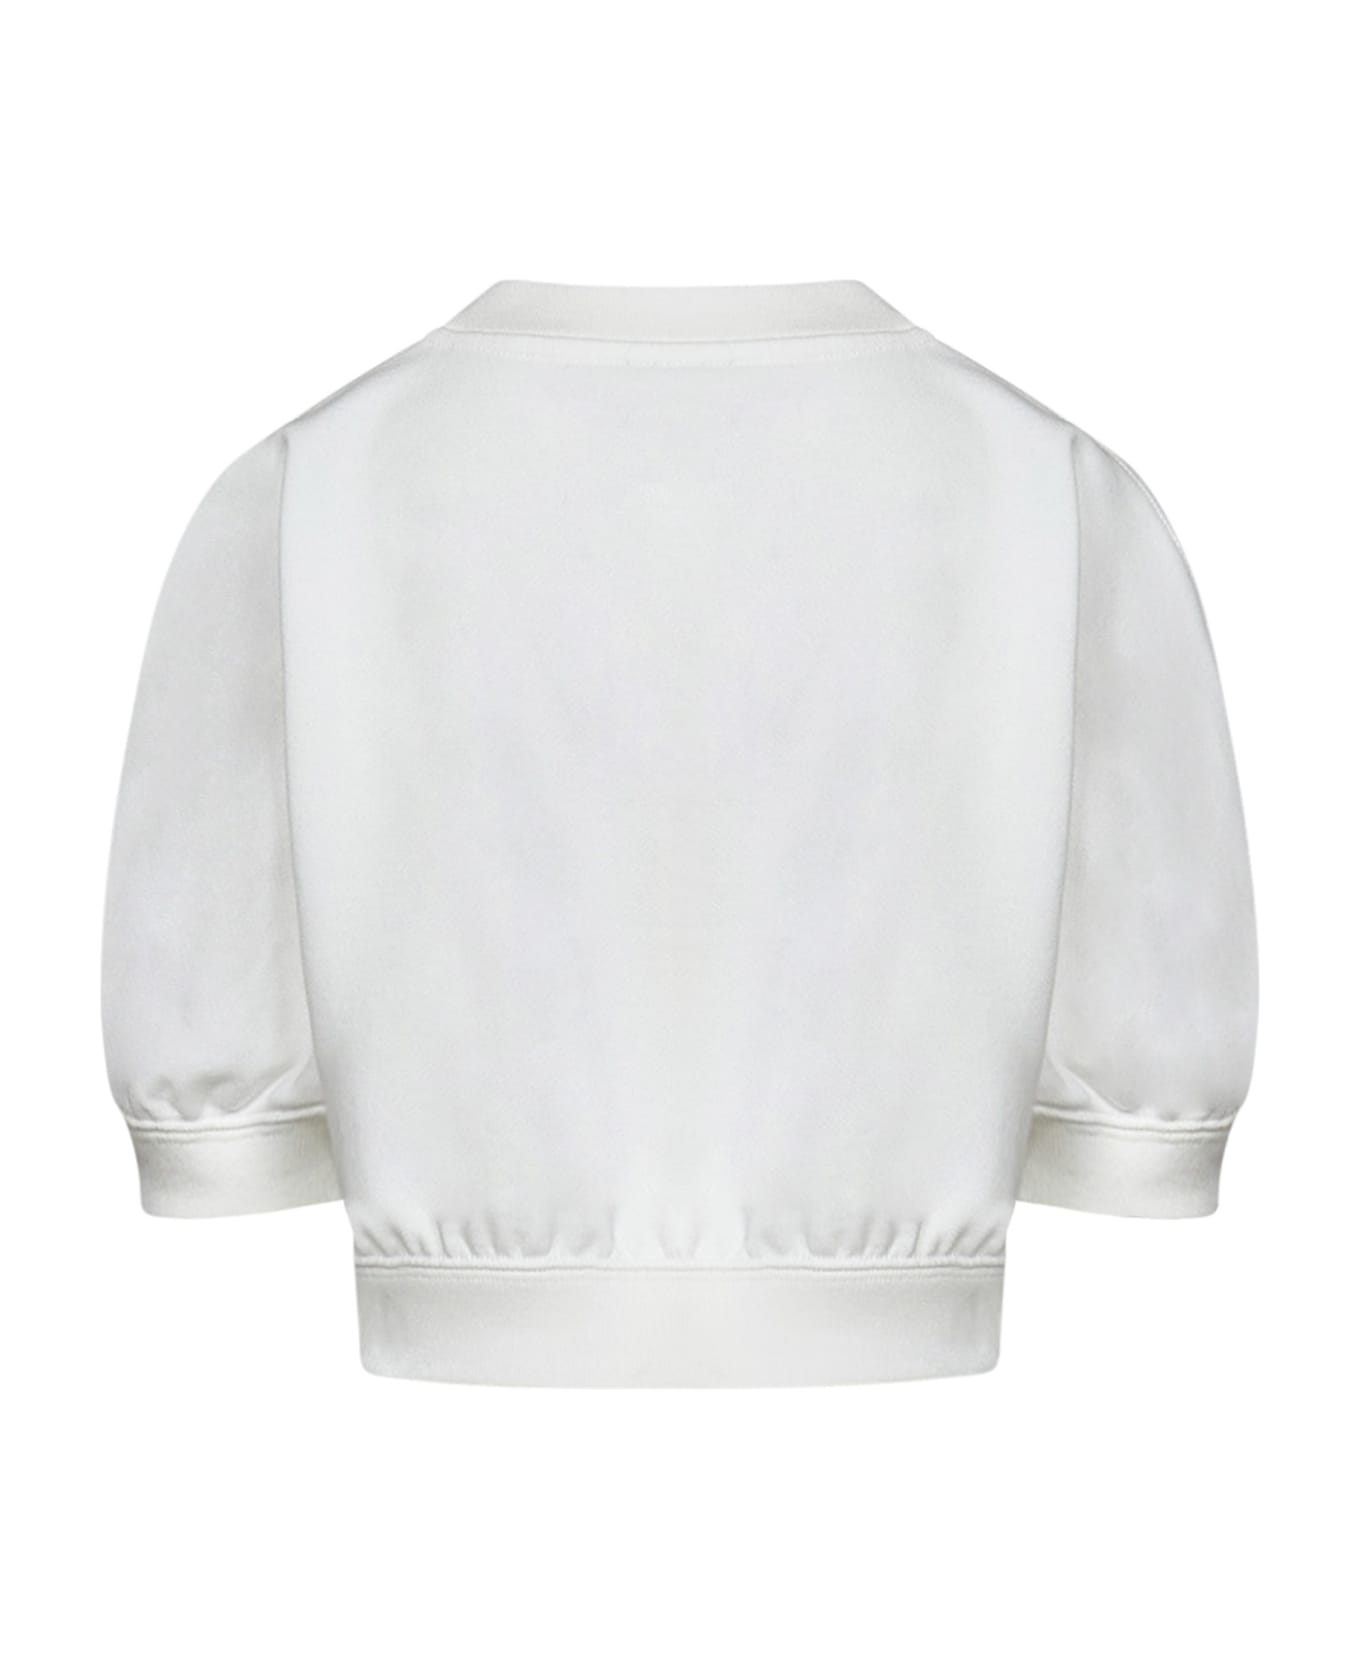 Fendi Kids Sweatshirt - White